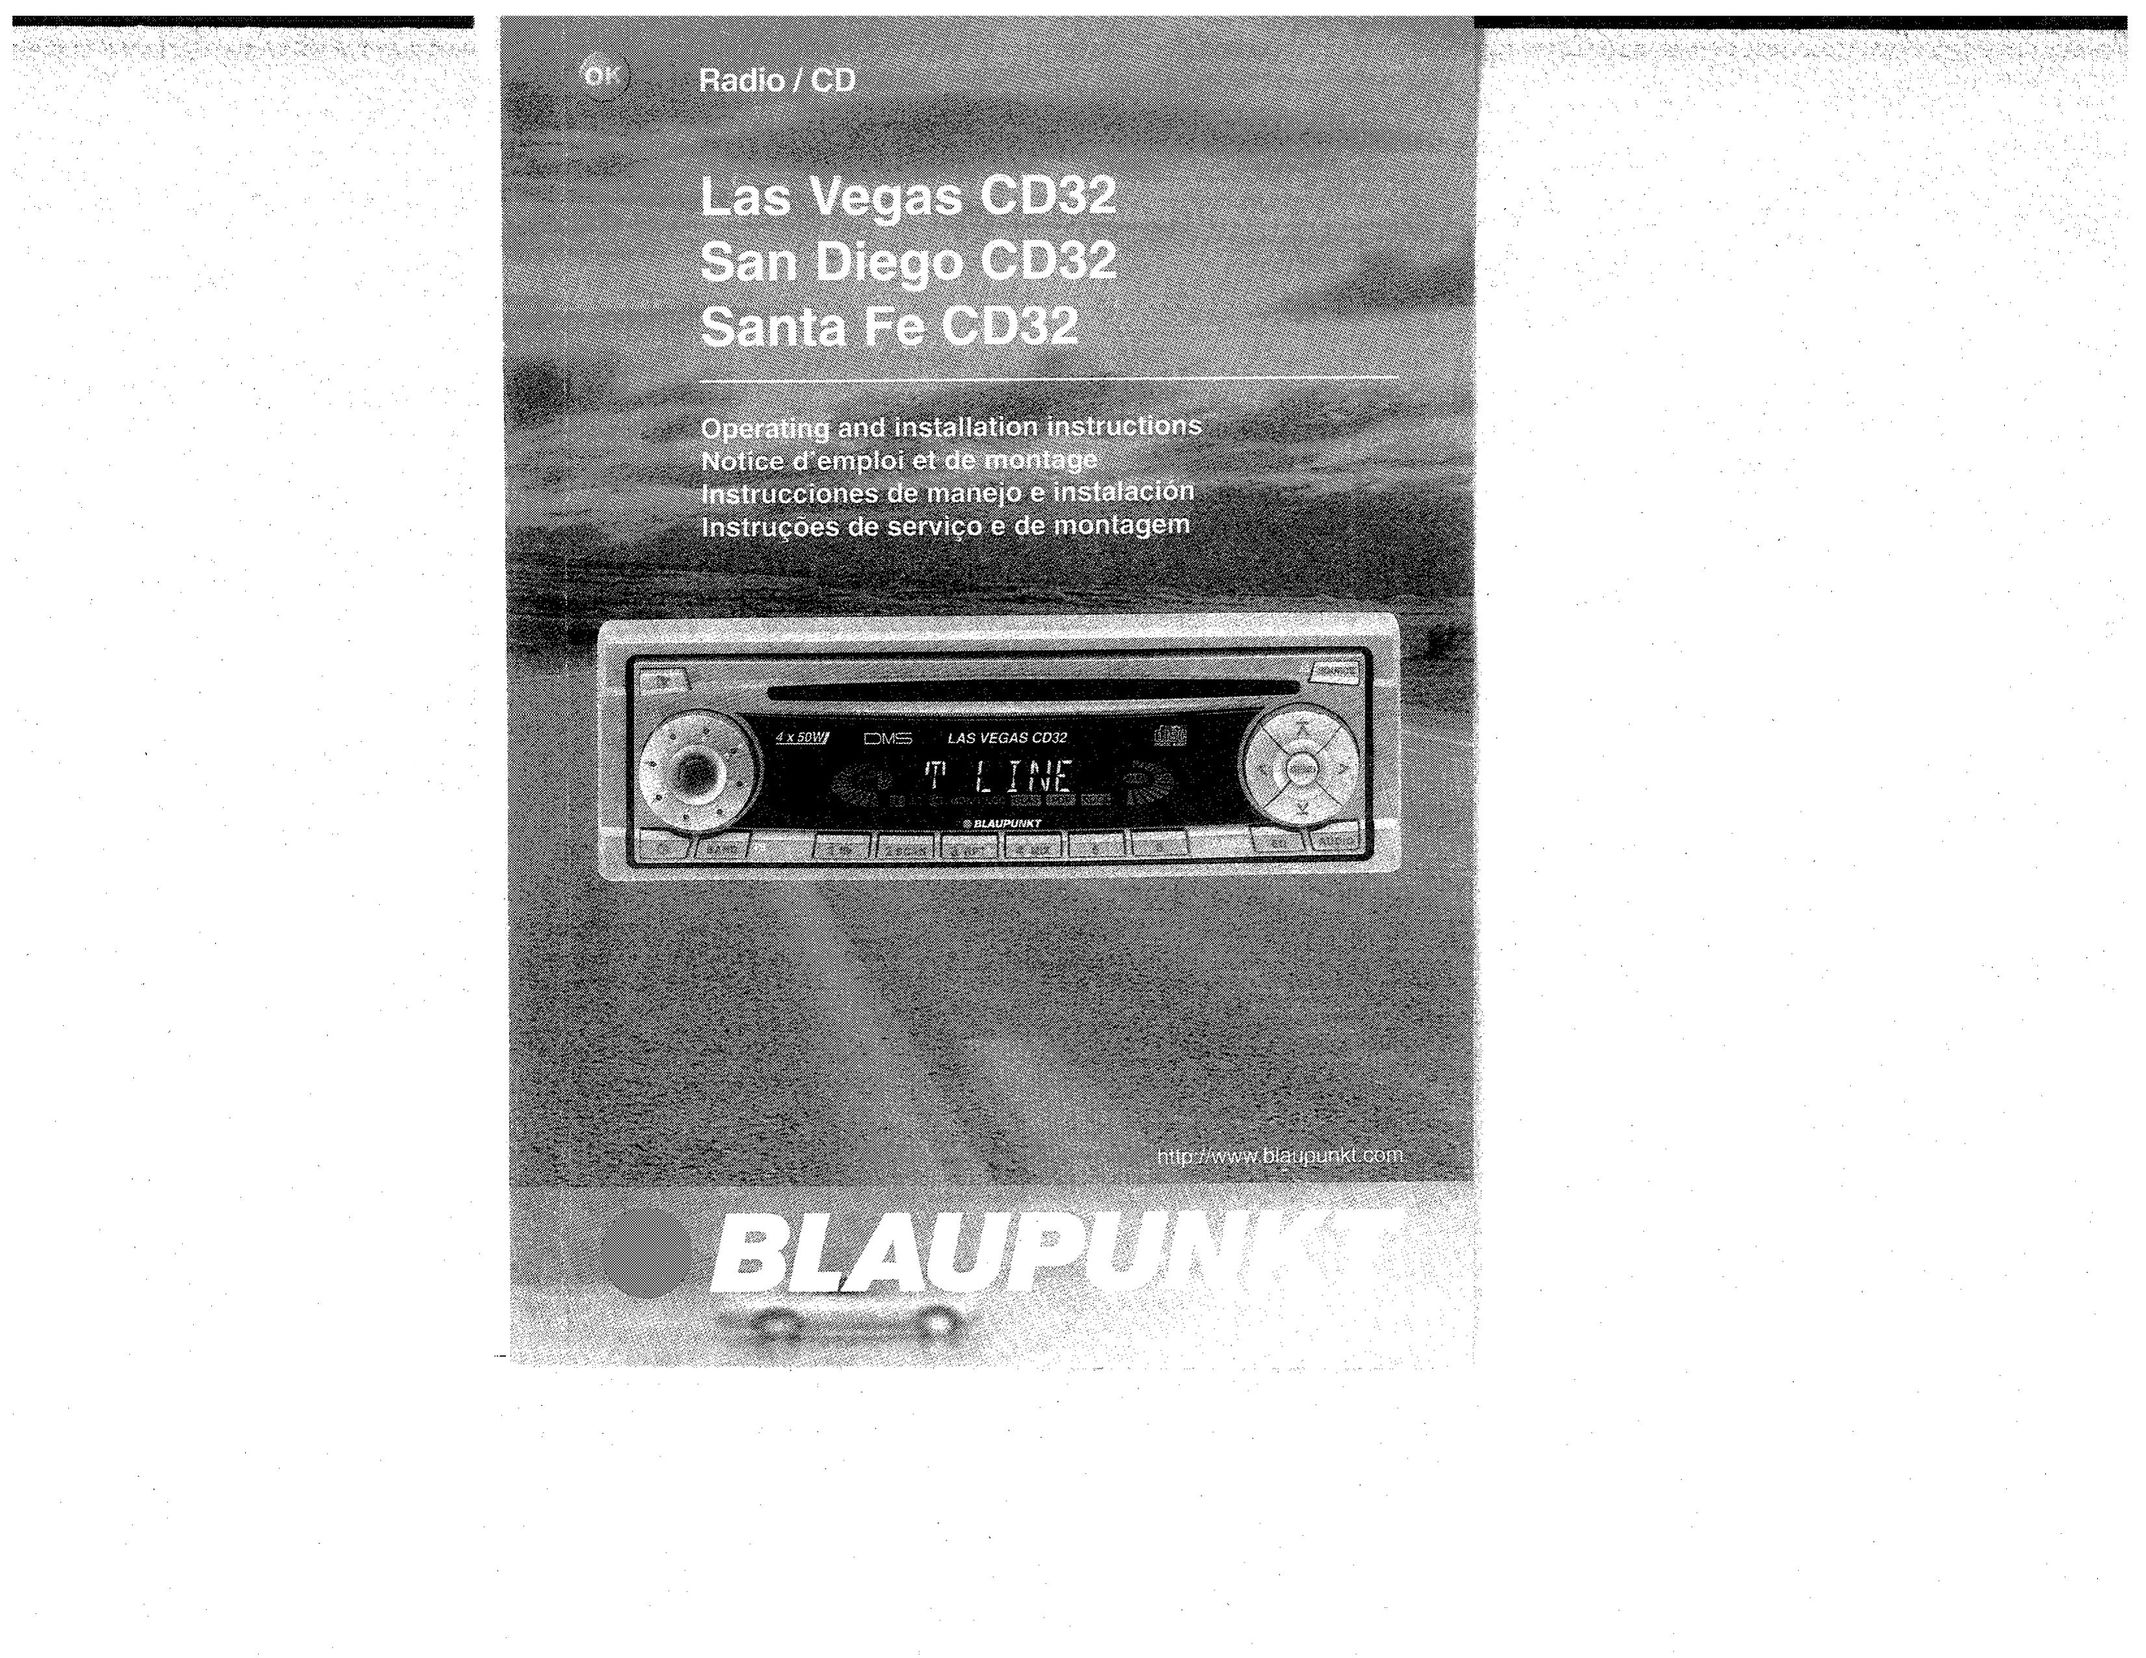 Yamaha Las Vegas CD32 Car Stereo System User Manual